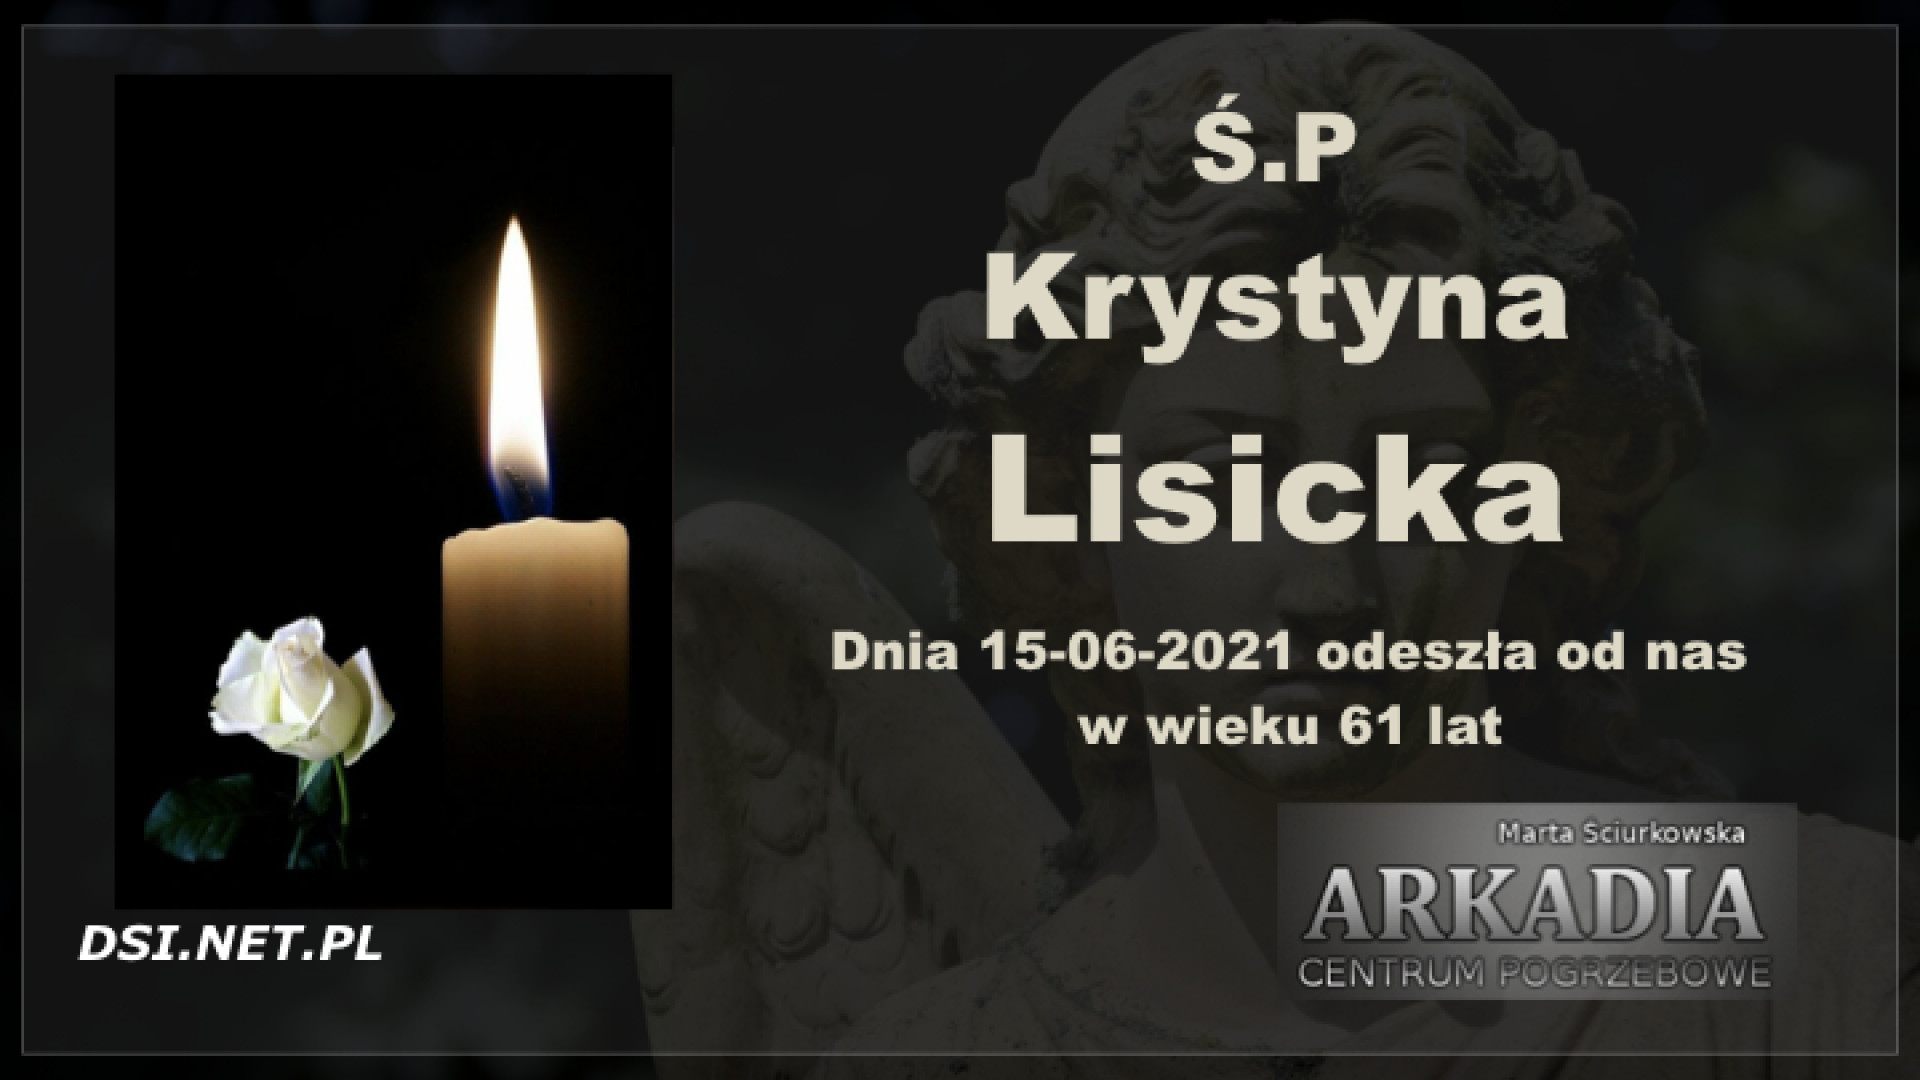 Ś.P. Krystyna Lisicka